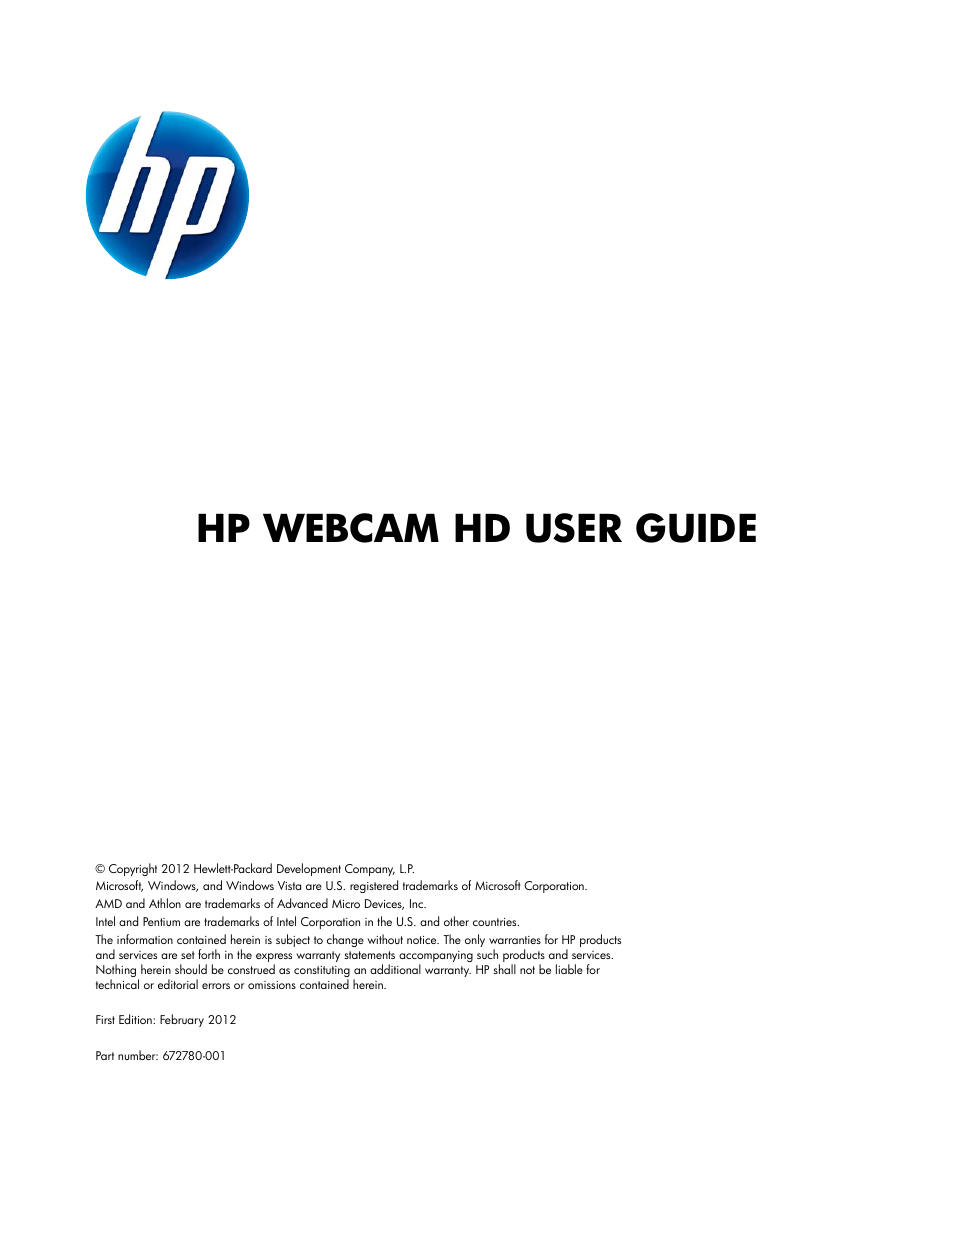 HP HD 2300 Webcam User Manual | 12 pages | Original mode